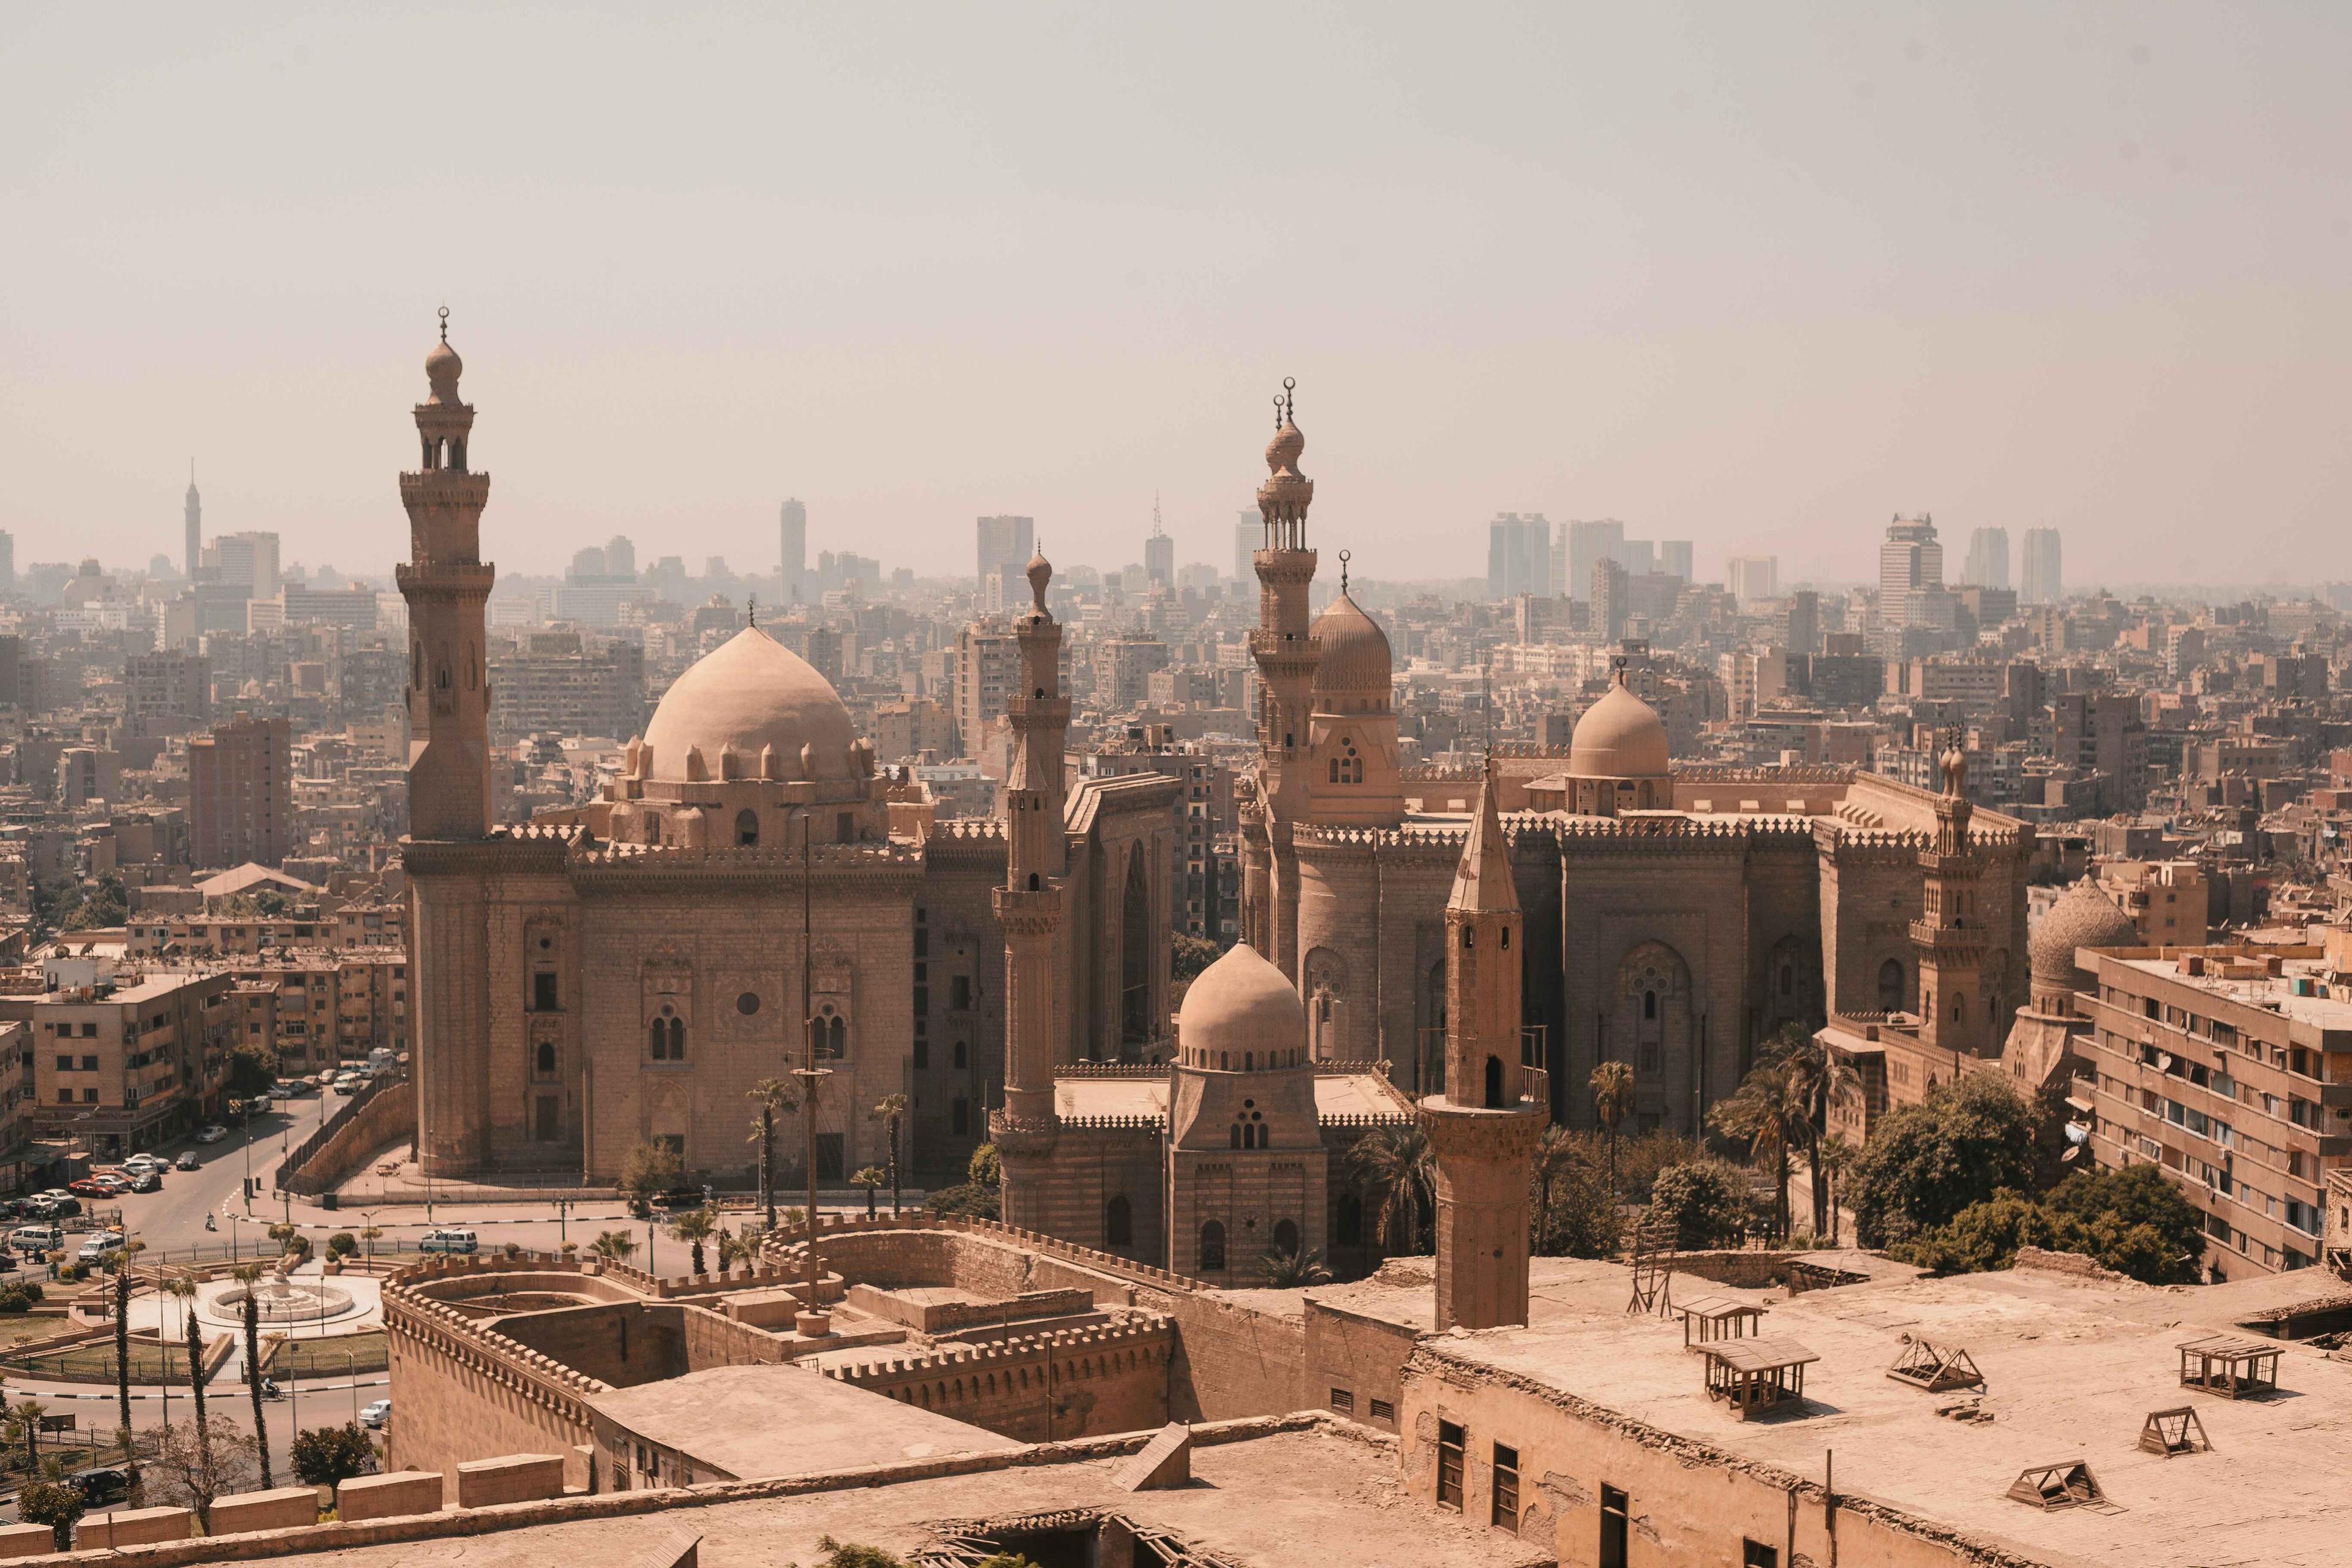 Image of Cairo, Egypt